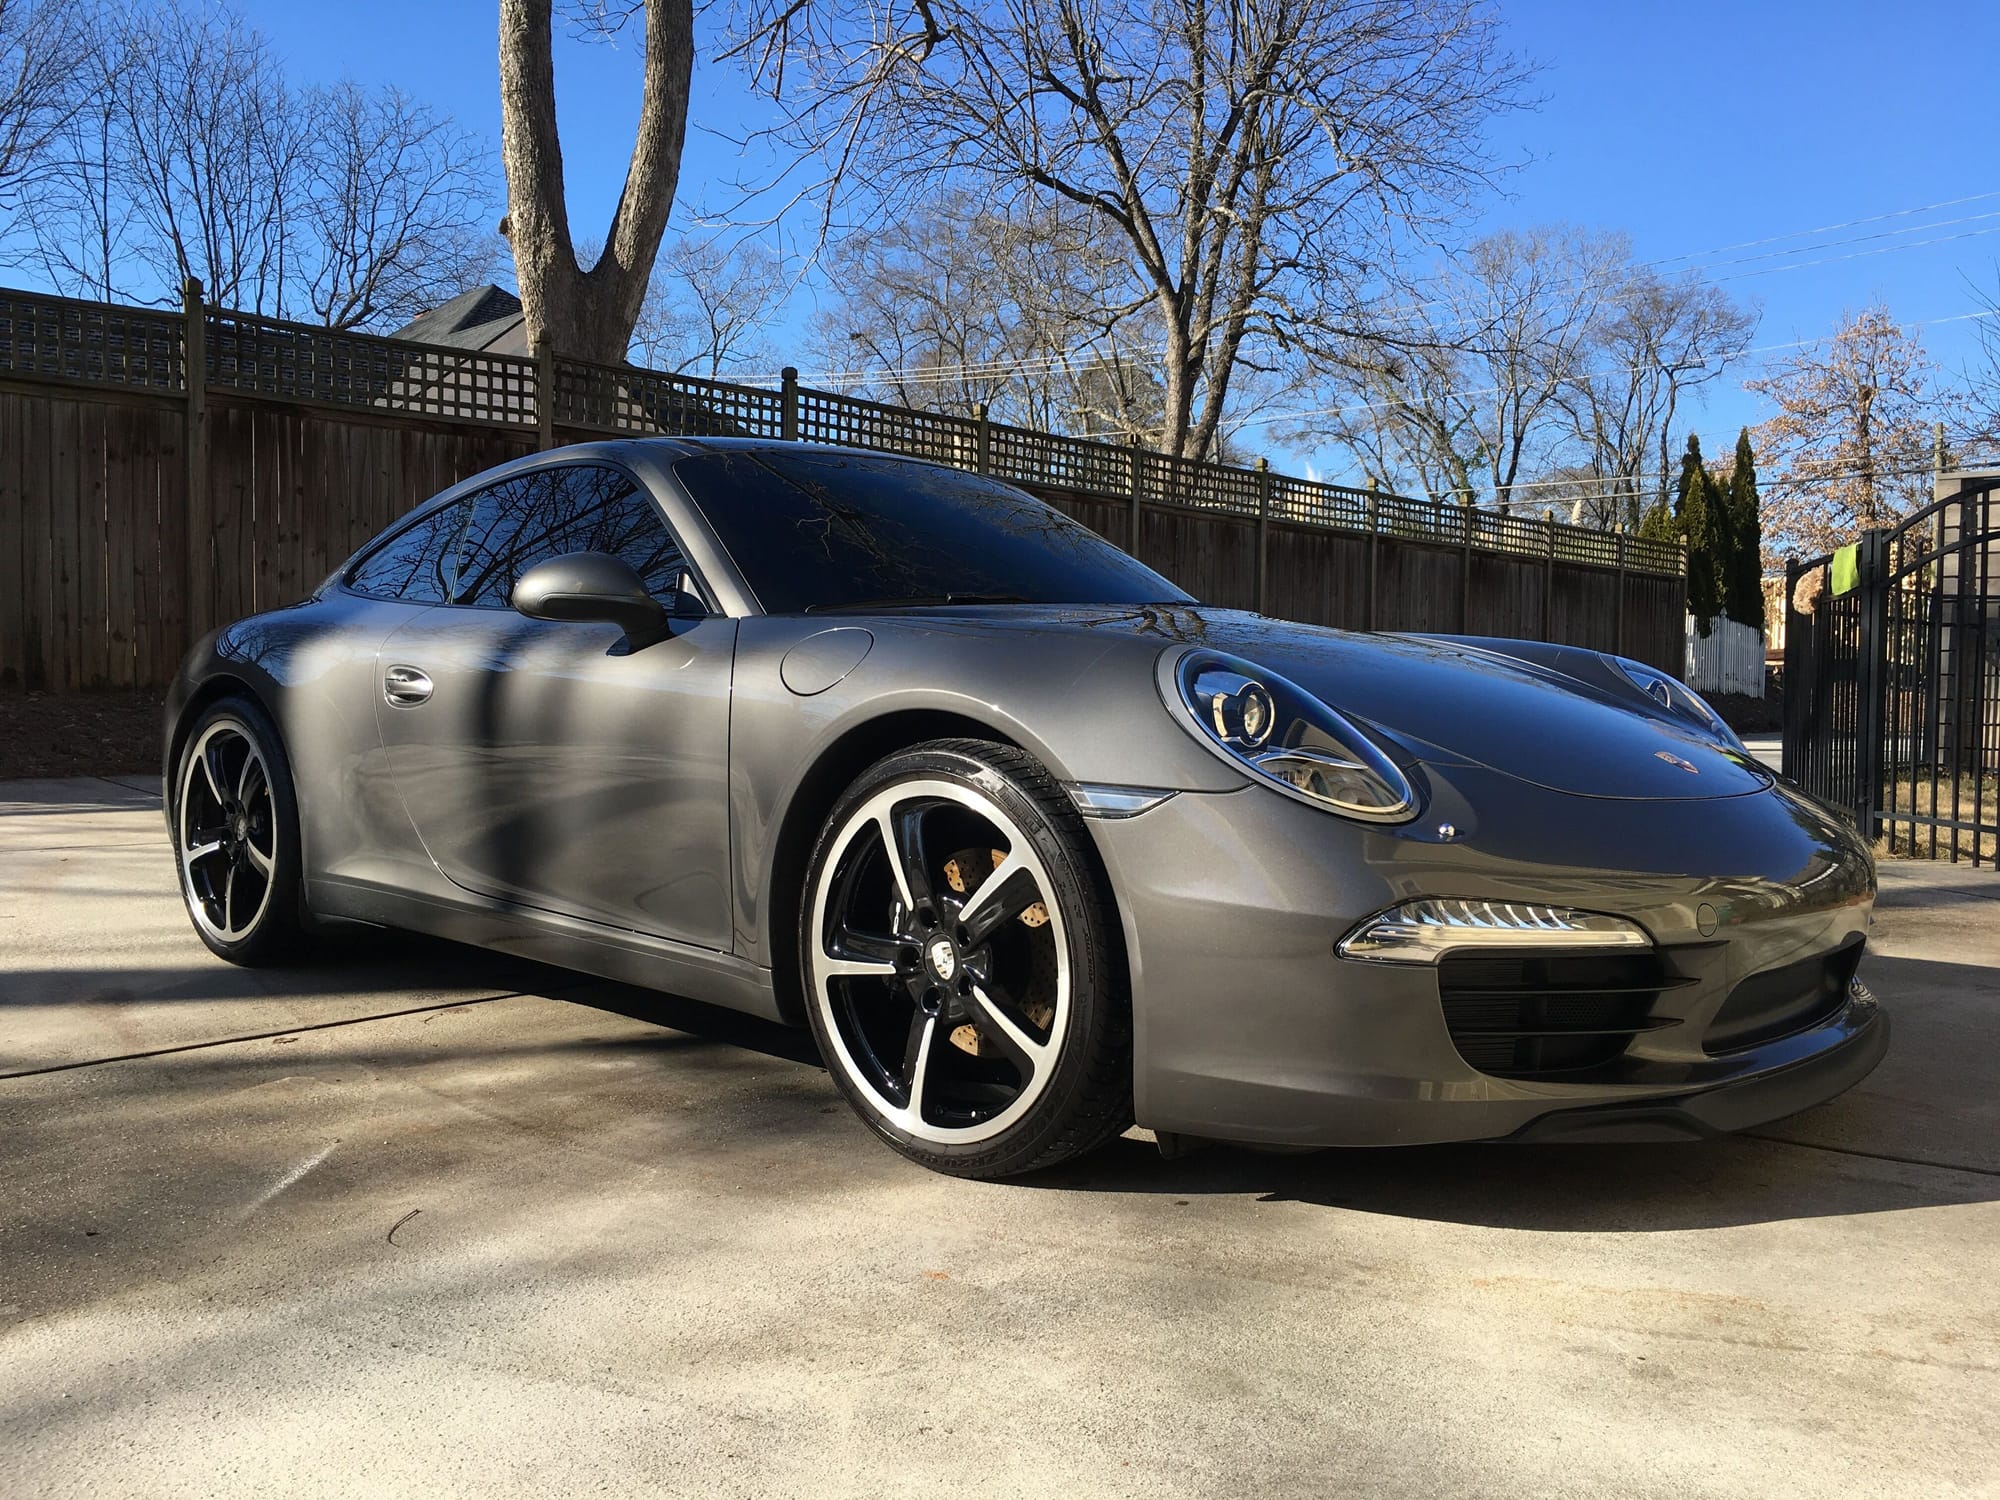 2012 Porsche 911 - 2012 991 agate grey 7MT - Used - VIN WP0AA2A94CS106535 - 46,500 Miles - 6 cyl - 2WD - Manual - Coupe - Gray - Atlanta, GA 30080, United States